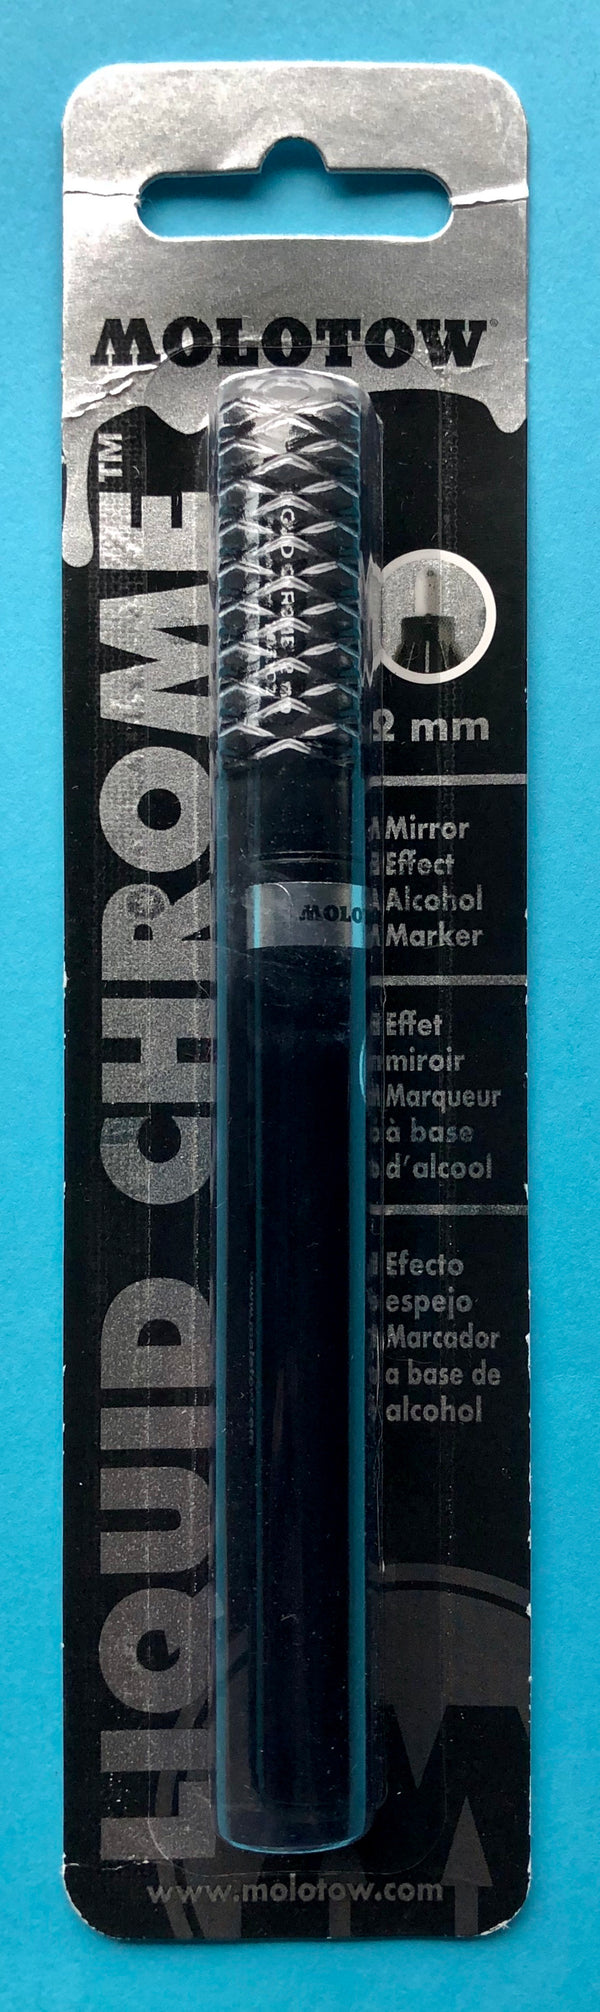 MOLOTOW™ Mirror Chrome Effect Alcohol Marker